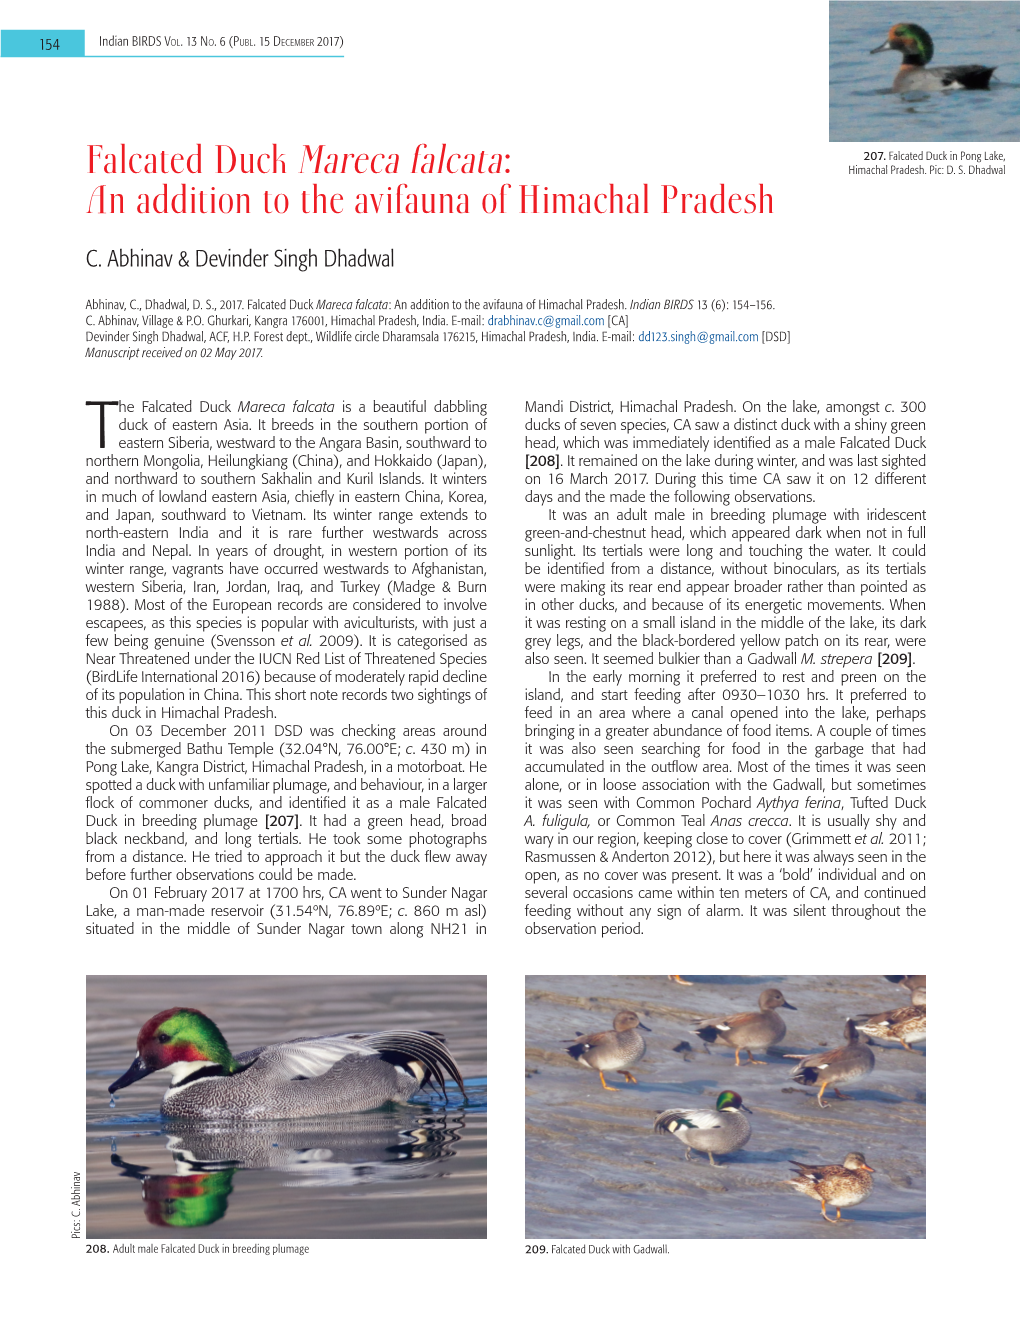 Falcated Duck Mareca Falcata: Himachal Pradesh